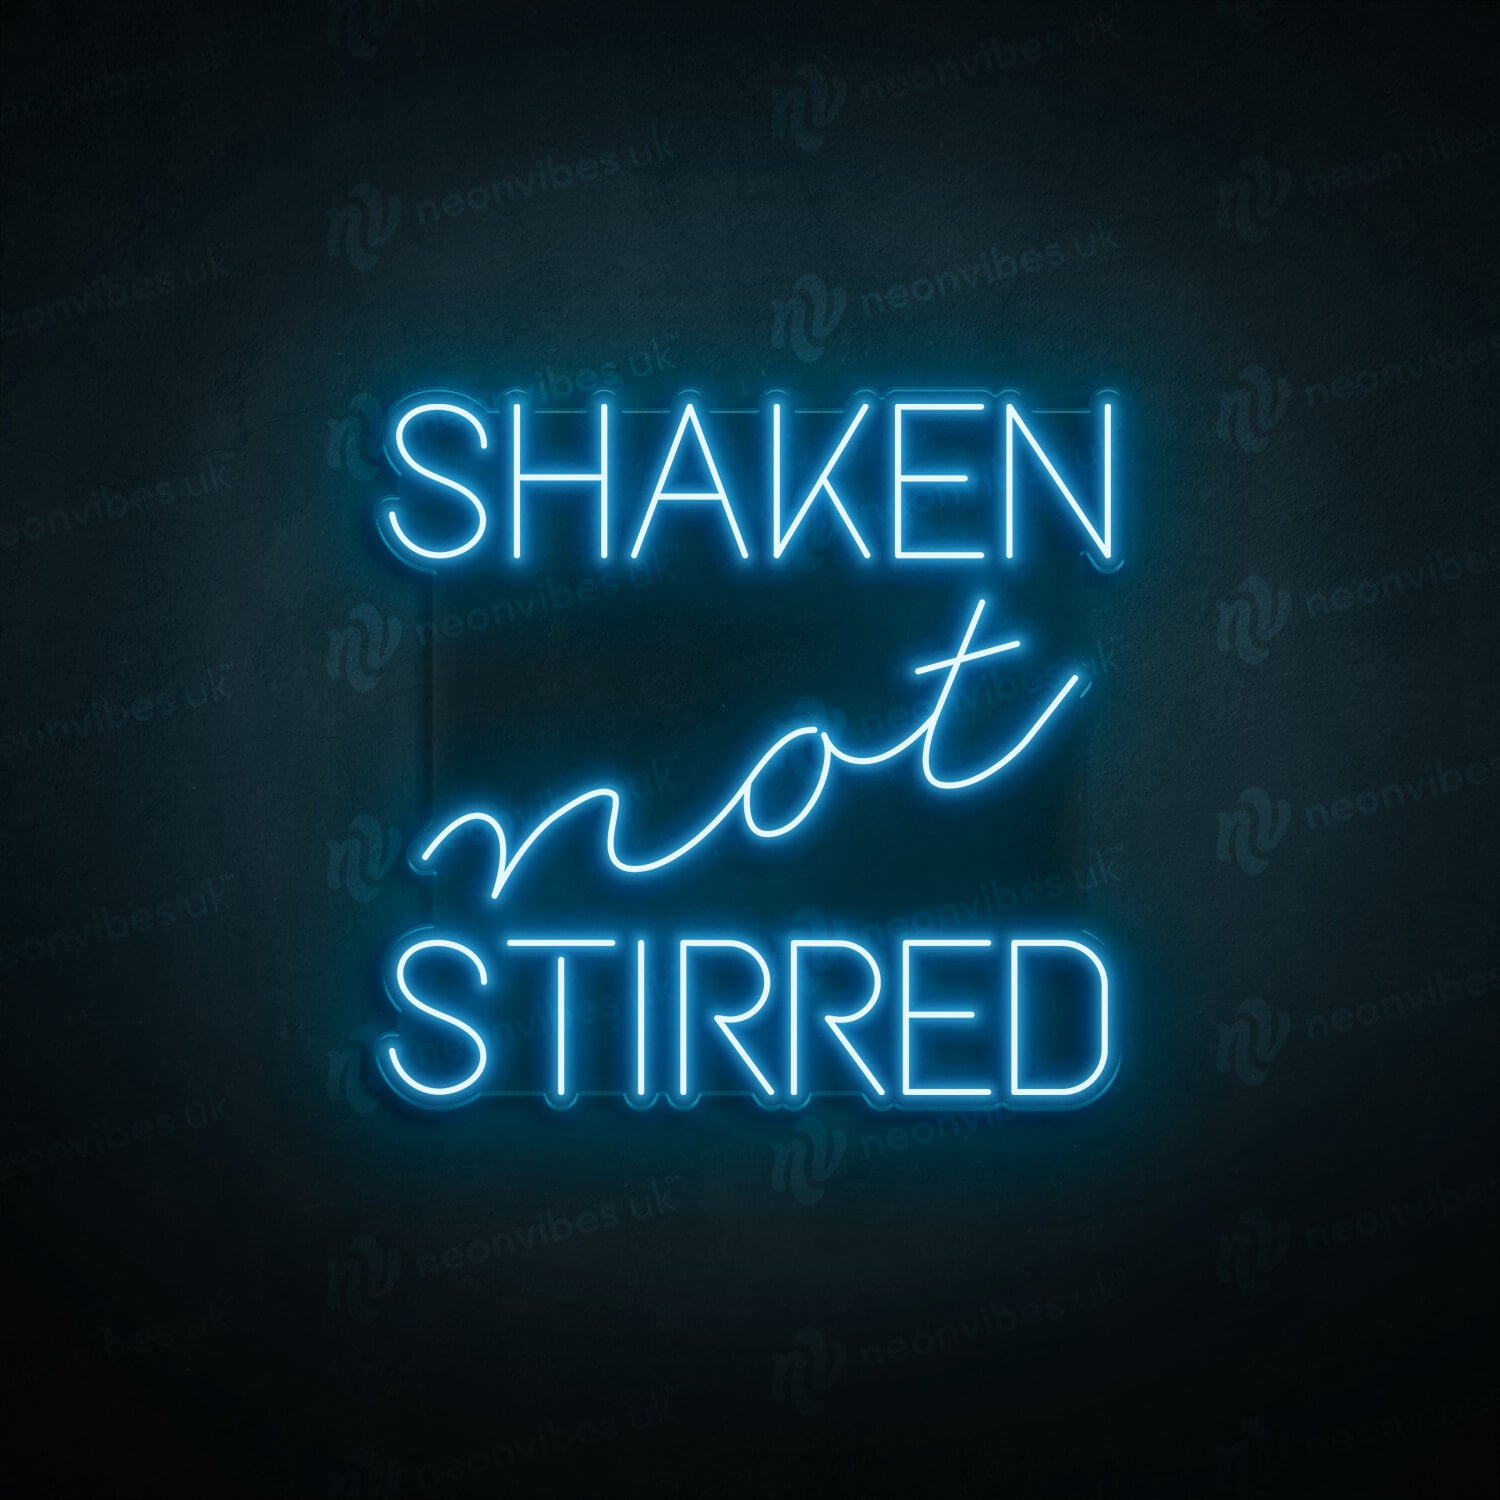 Shaken Not Stirred neon sign